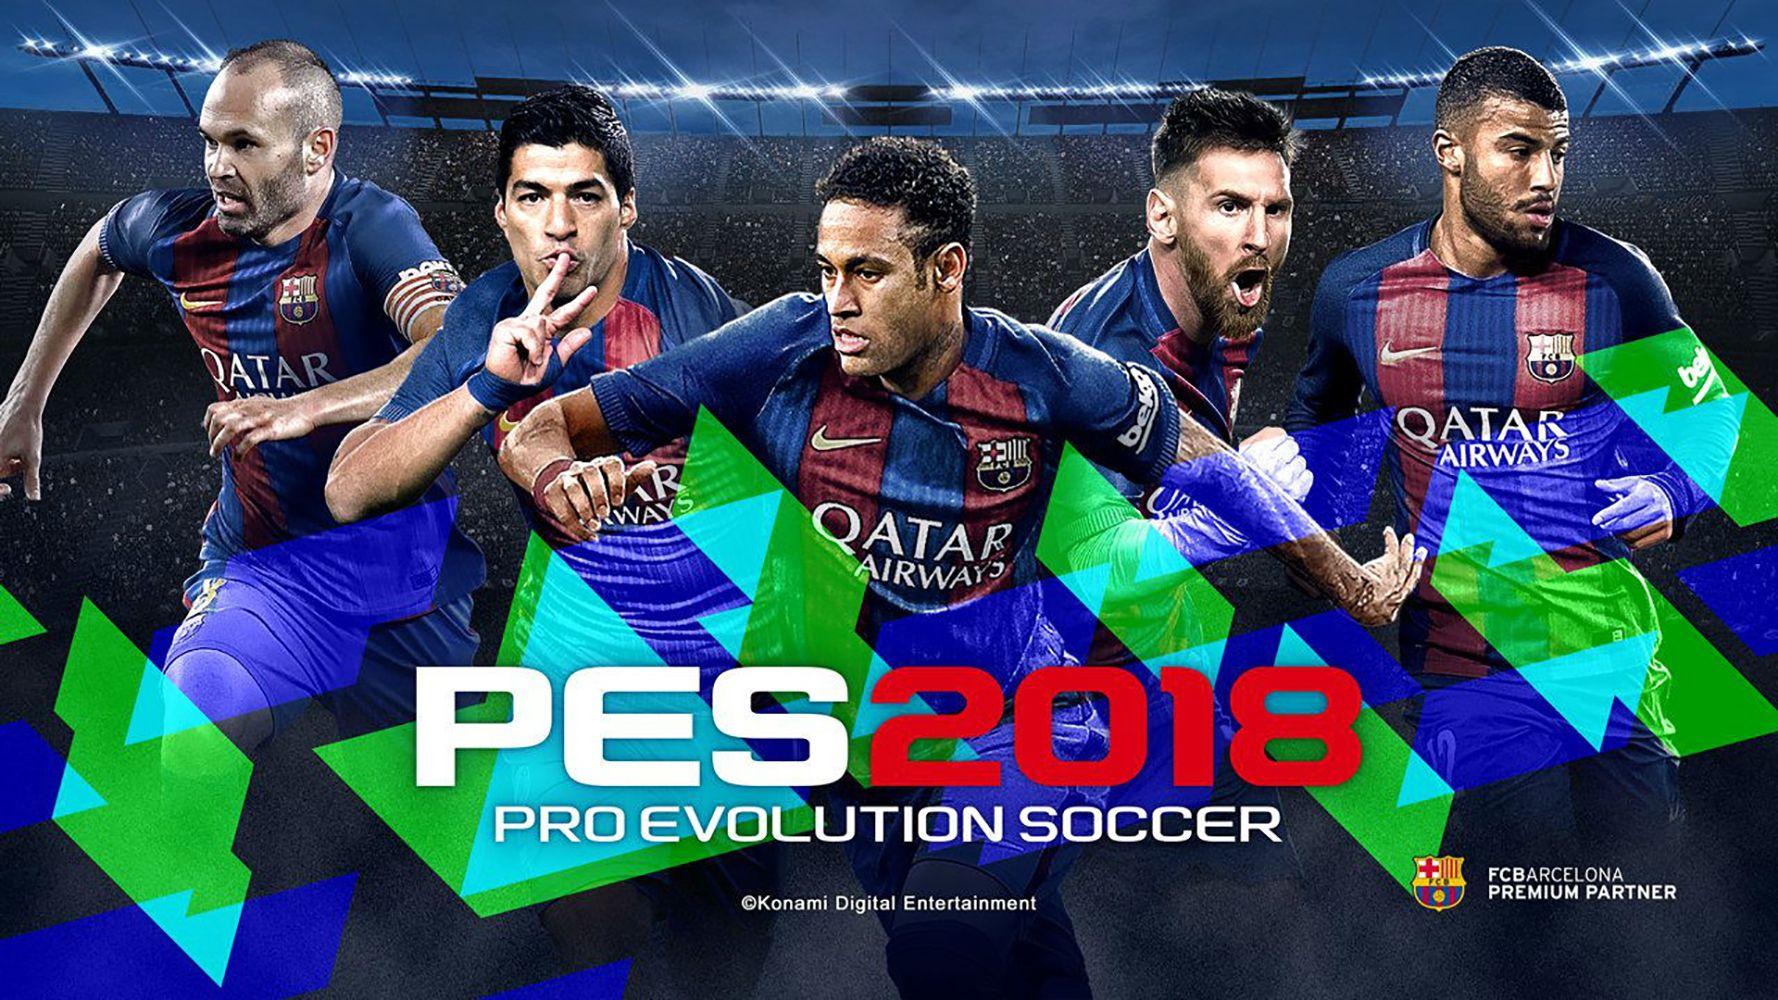 Pro Evolution Soccer 2018 HD Wallpaper. Background